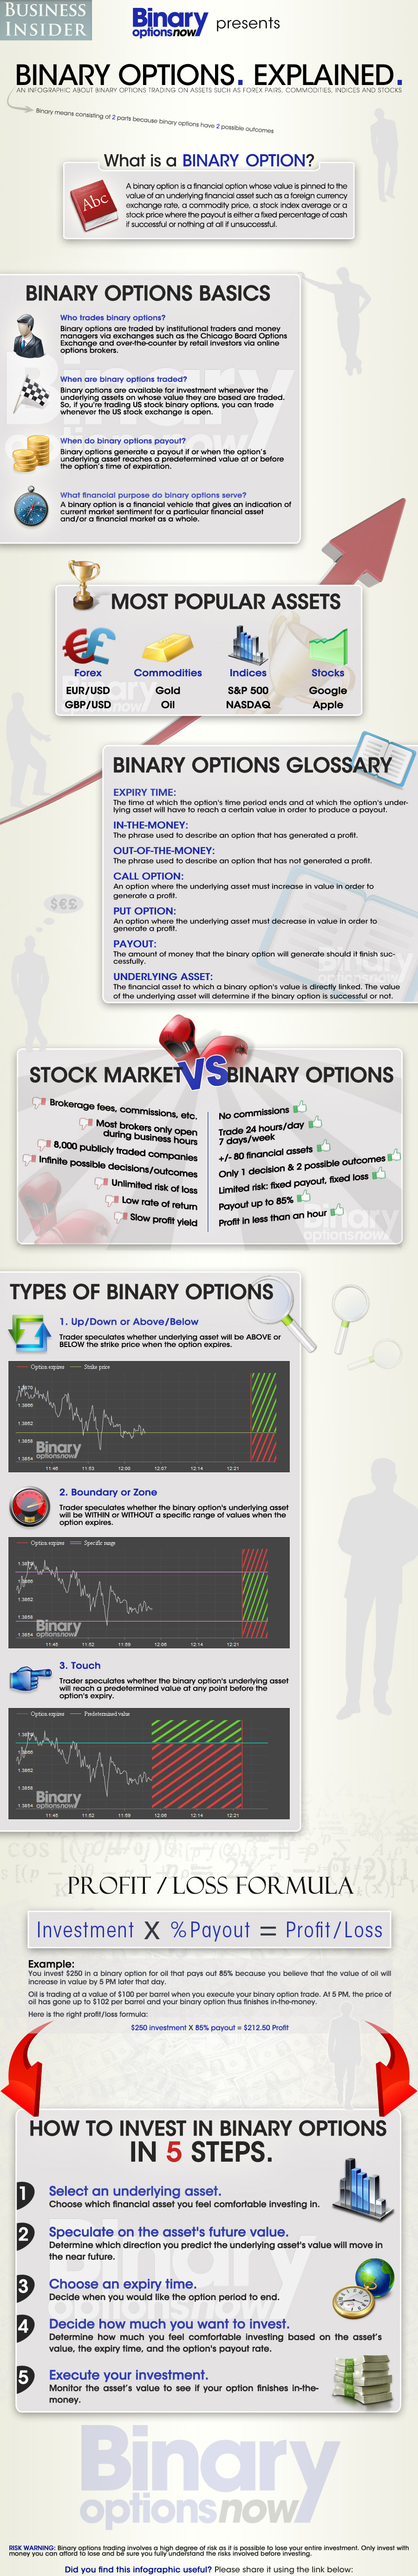 Binary options business